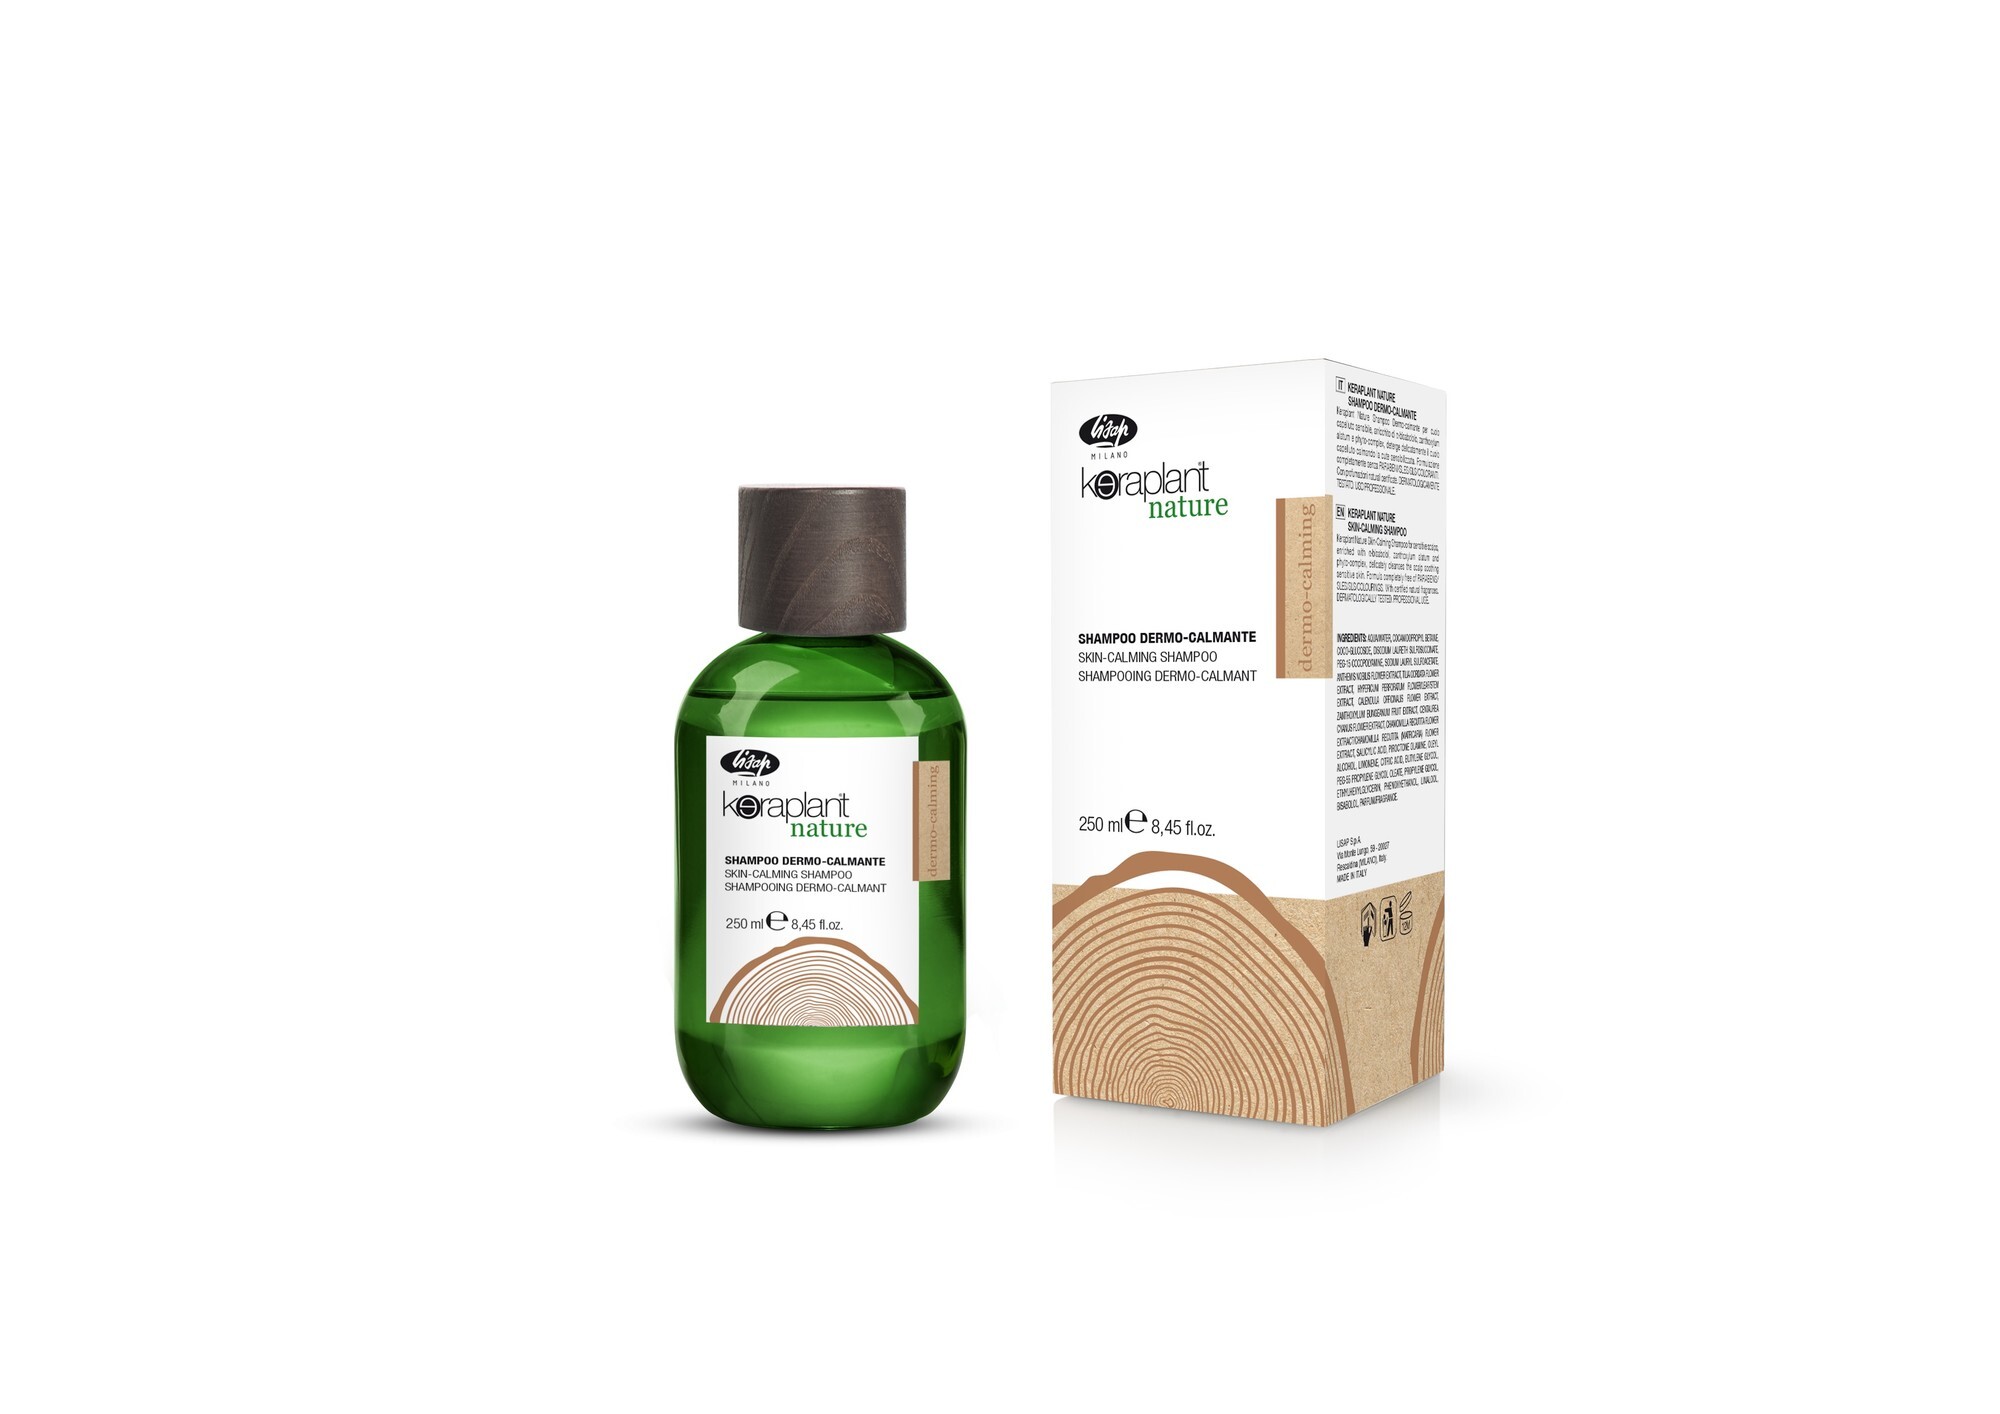 Lisap Keraplant Nature Skin-Calming Shampoo 250ml